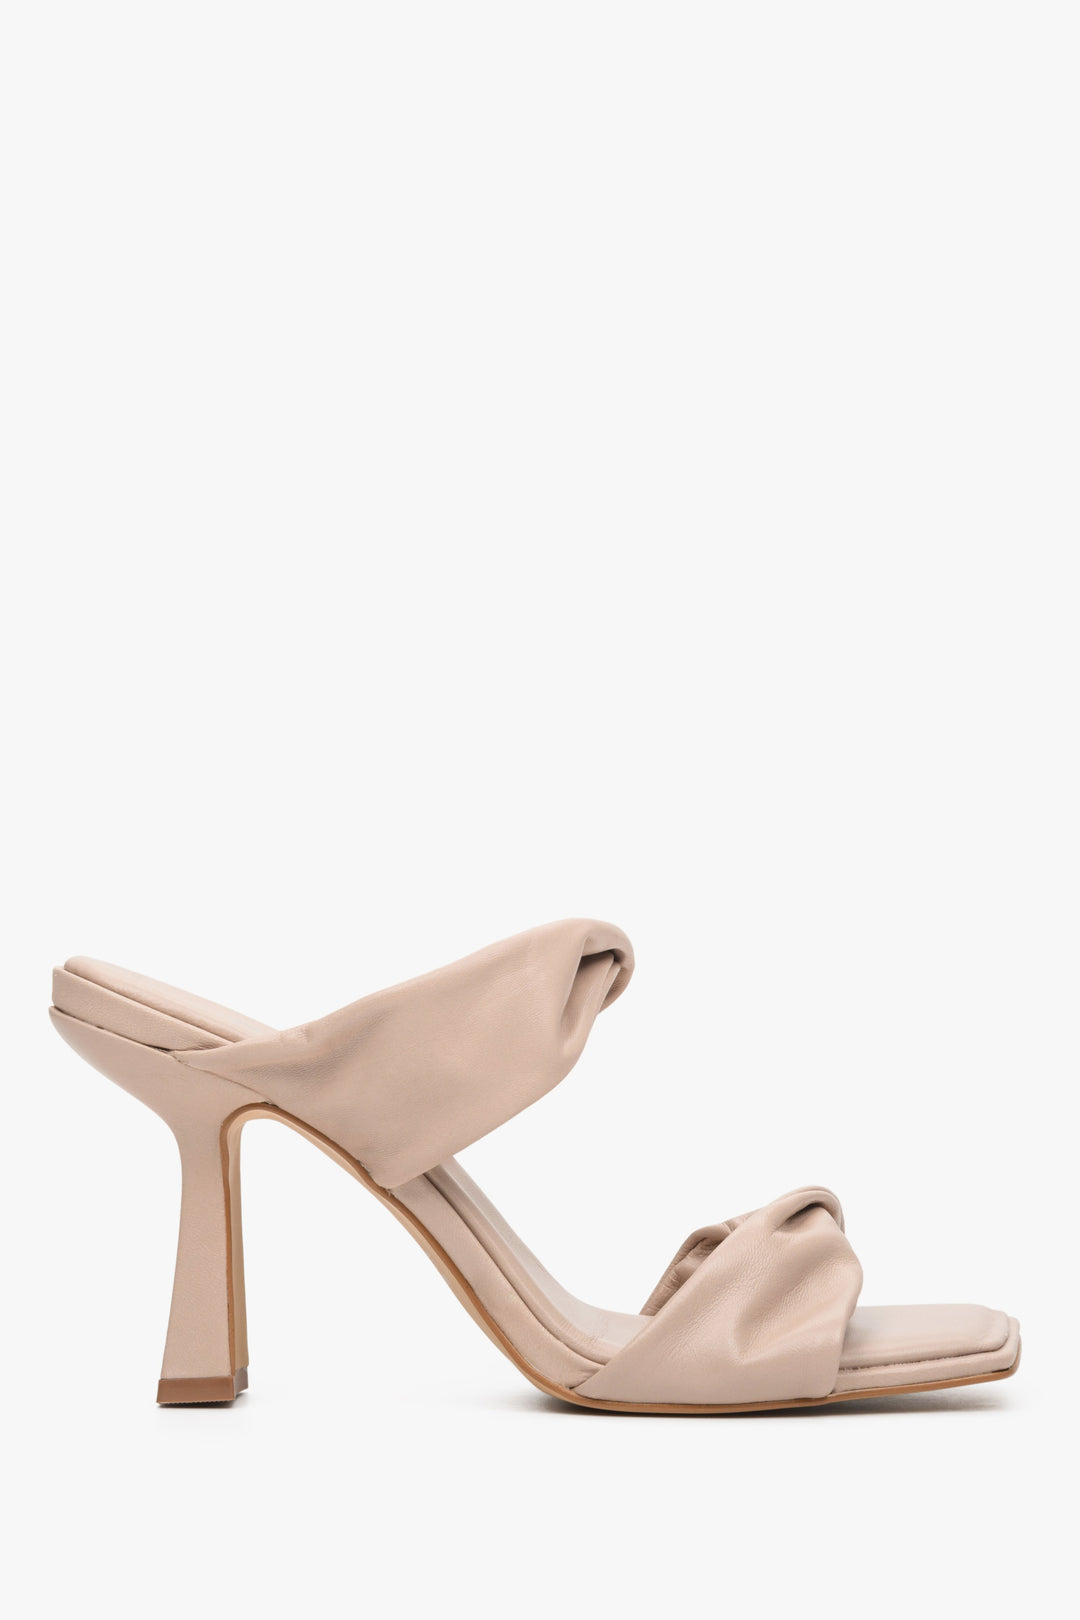 Stylish, leather women's heeled sandals in beige by Estro - shoe profile.